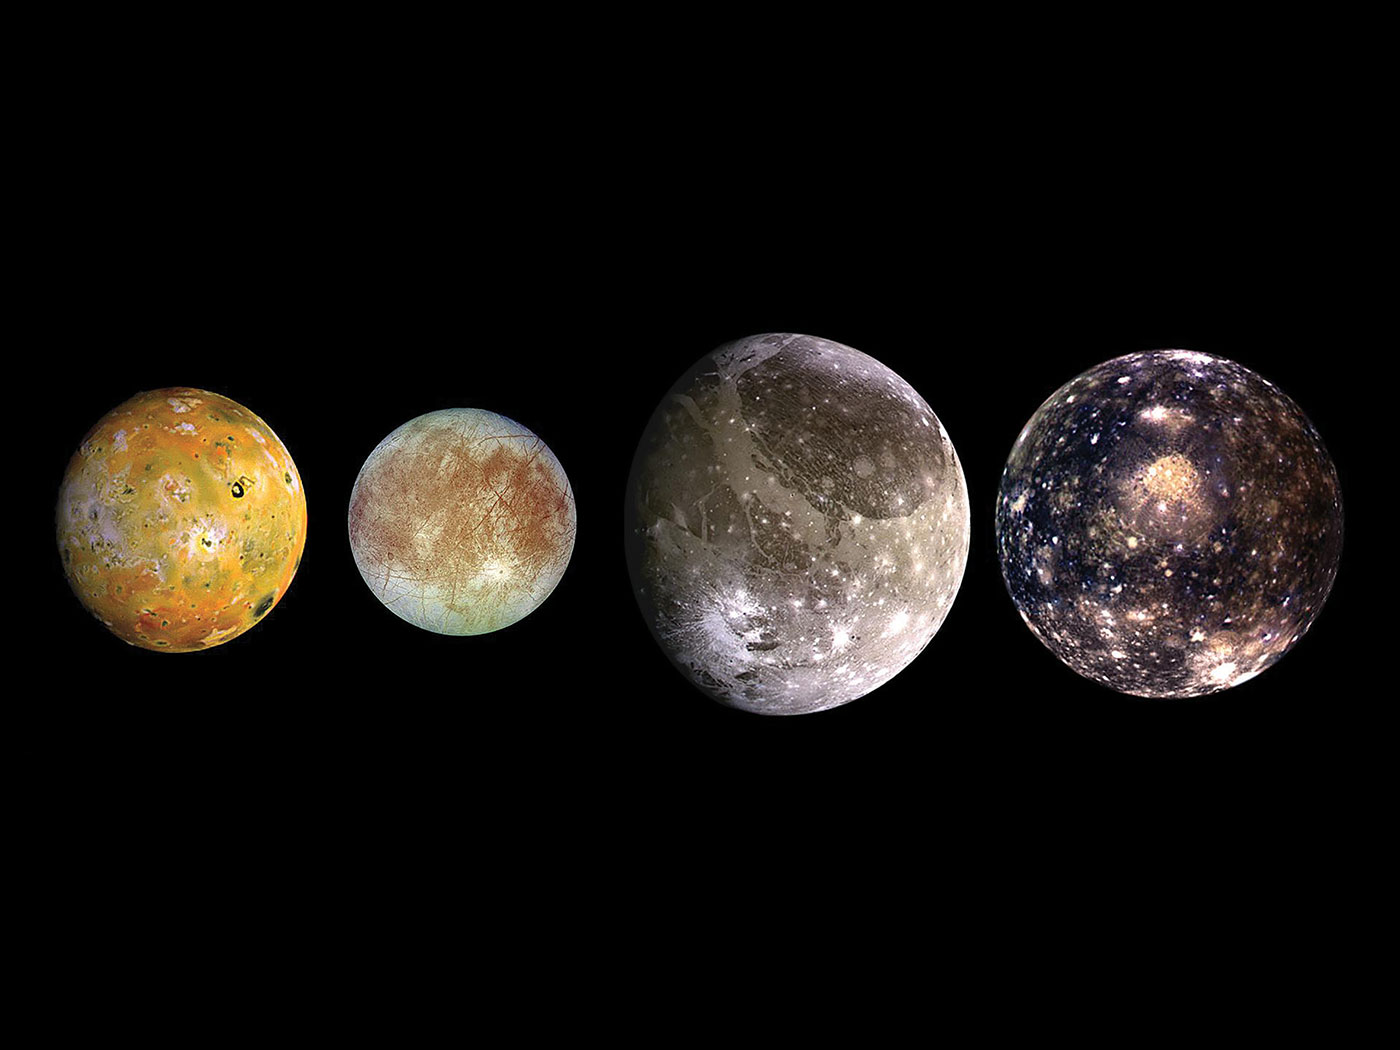 Moons satellite. Юпитер и галилеевы Луны. Галилео Галилей спутники Юпитера. Галилеевы спутники Юпитера. Галилеевские спутники Юпитера: Каллисто, Ганимед, Европа, ио.